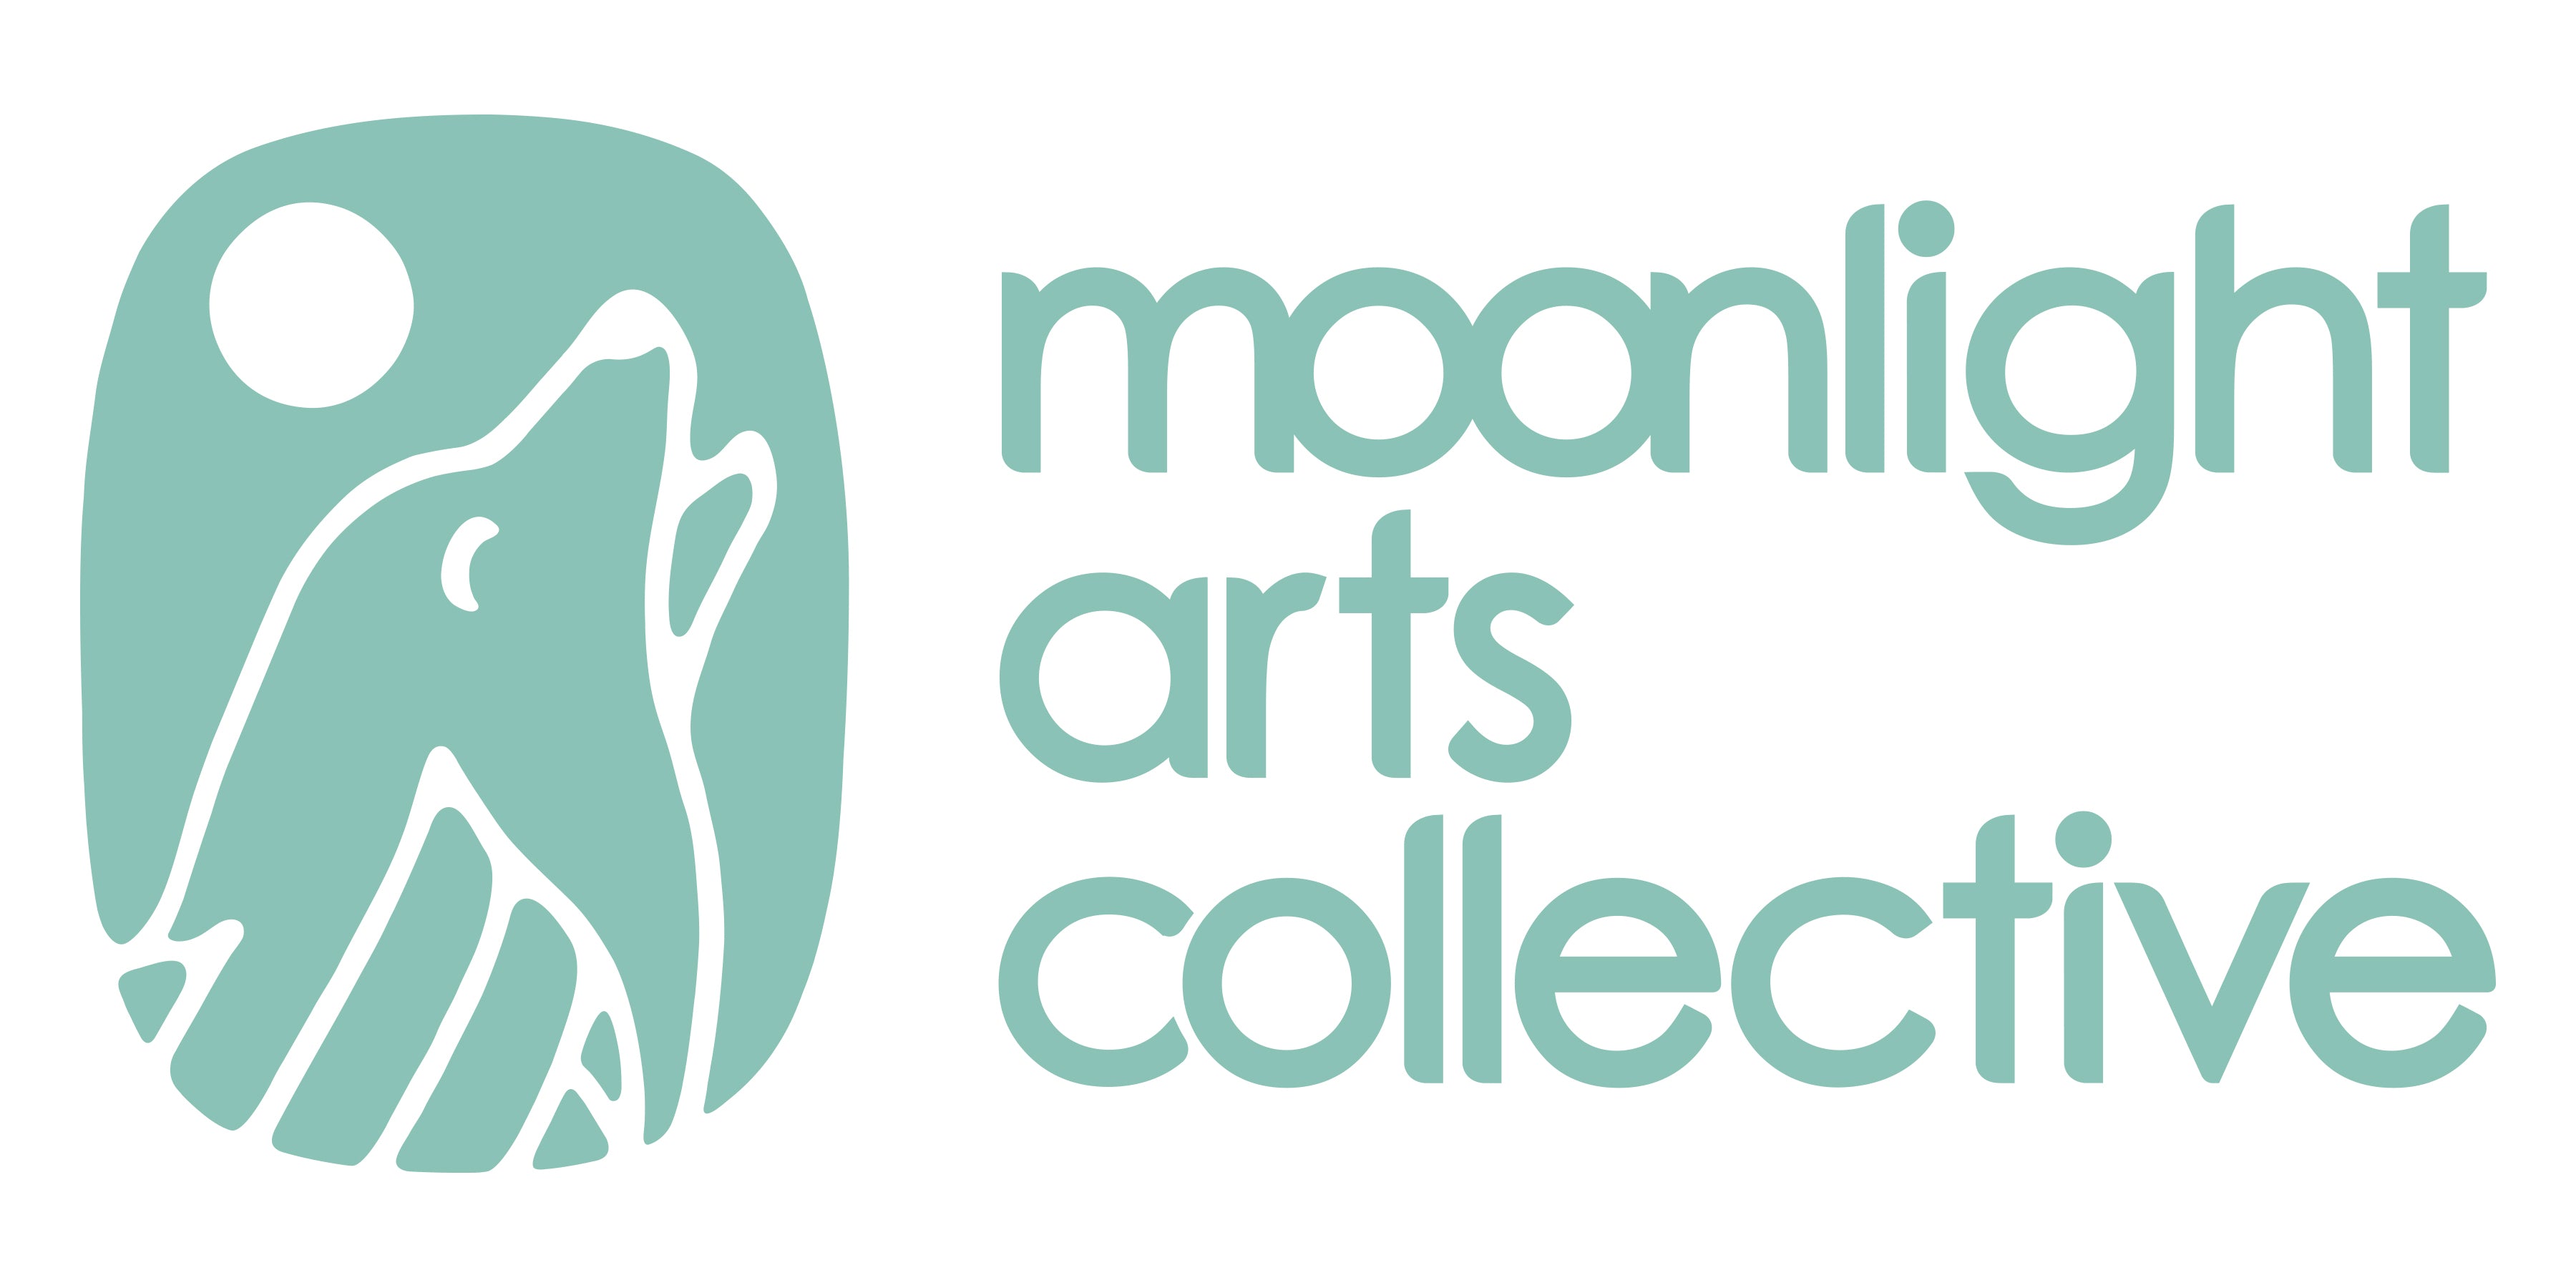 heart evangelista unveils loves first bloom – Moonlight Arts Collective